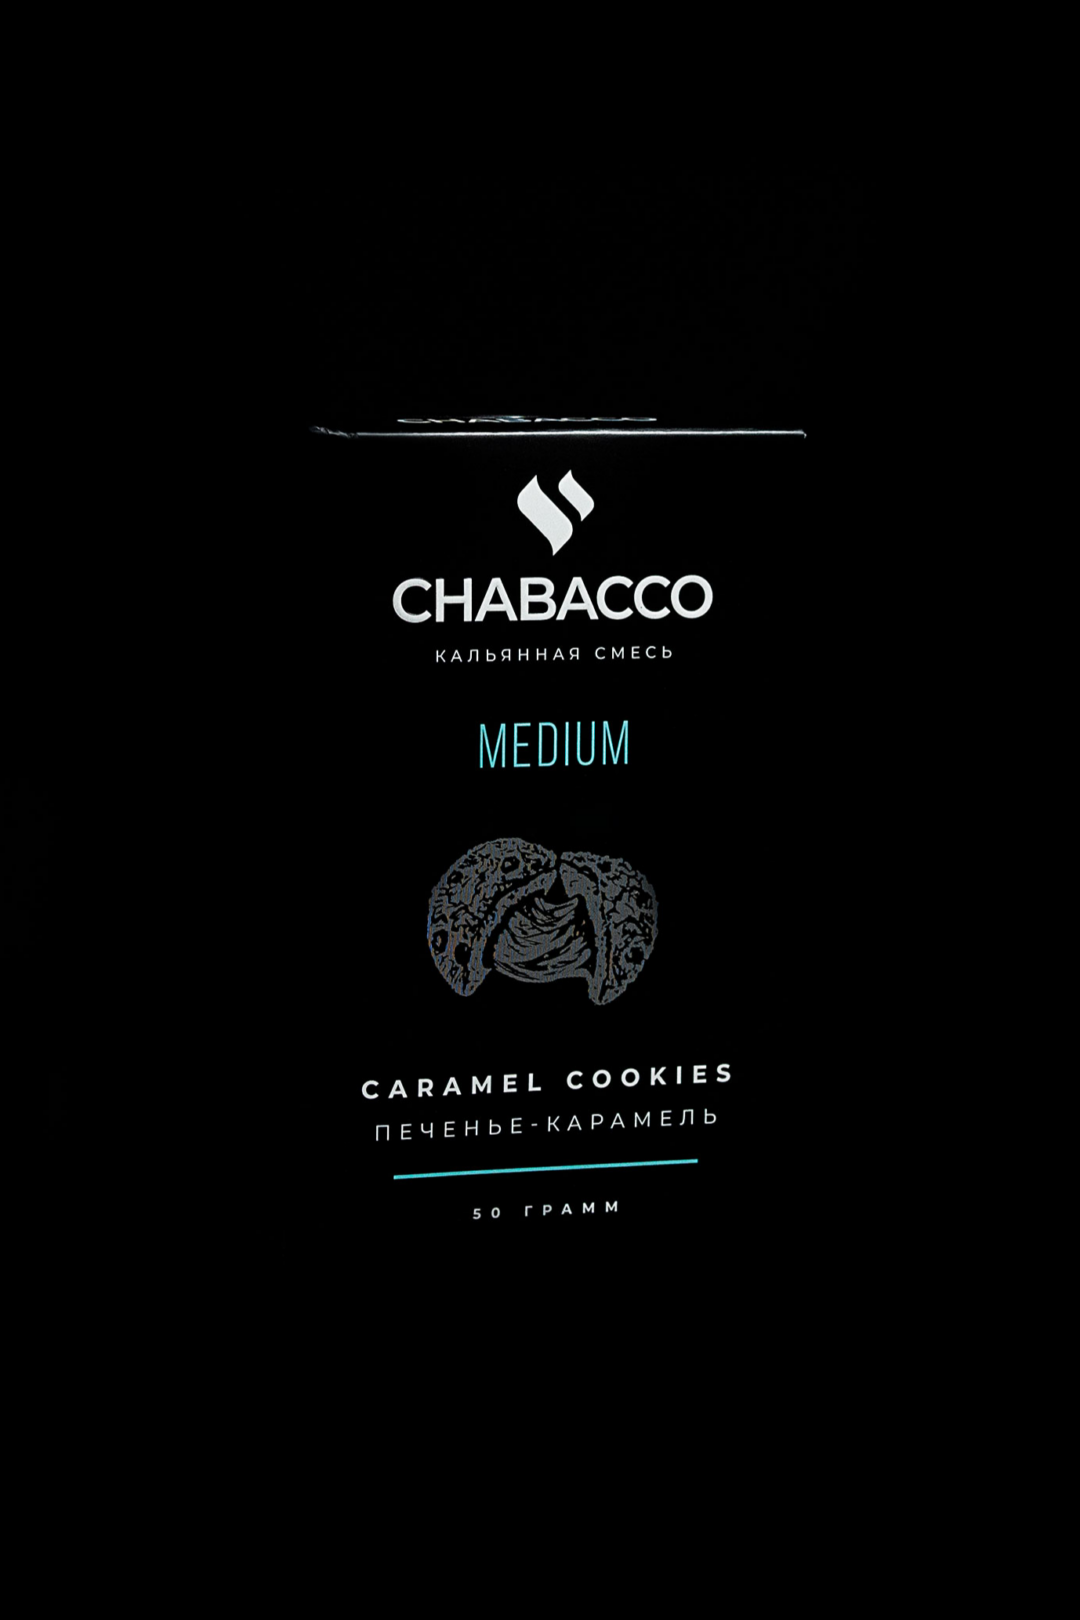 Chabacco Medium CARAMEL COOKIES ( Karamel, peçenye )